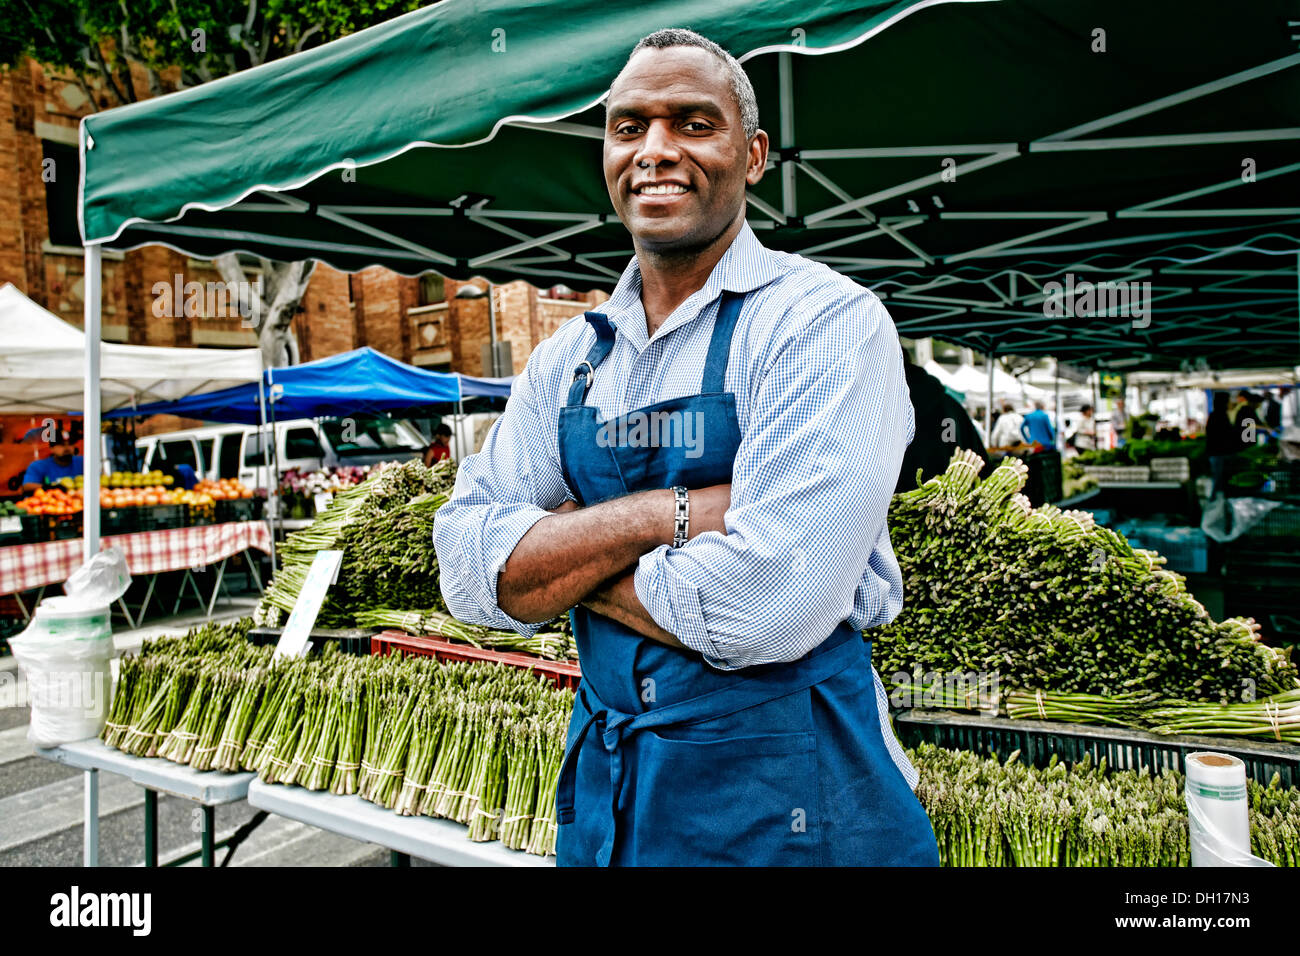 Black Man working at outdoor market Banque D'Images